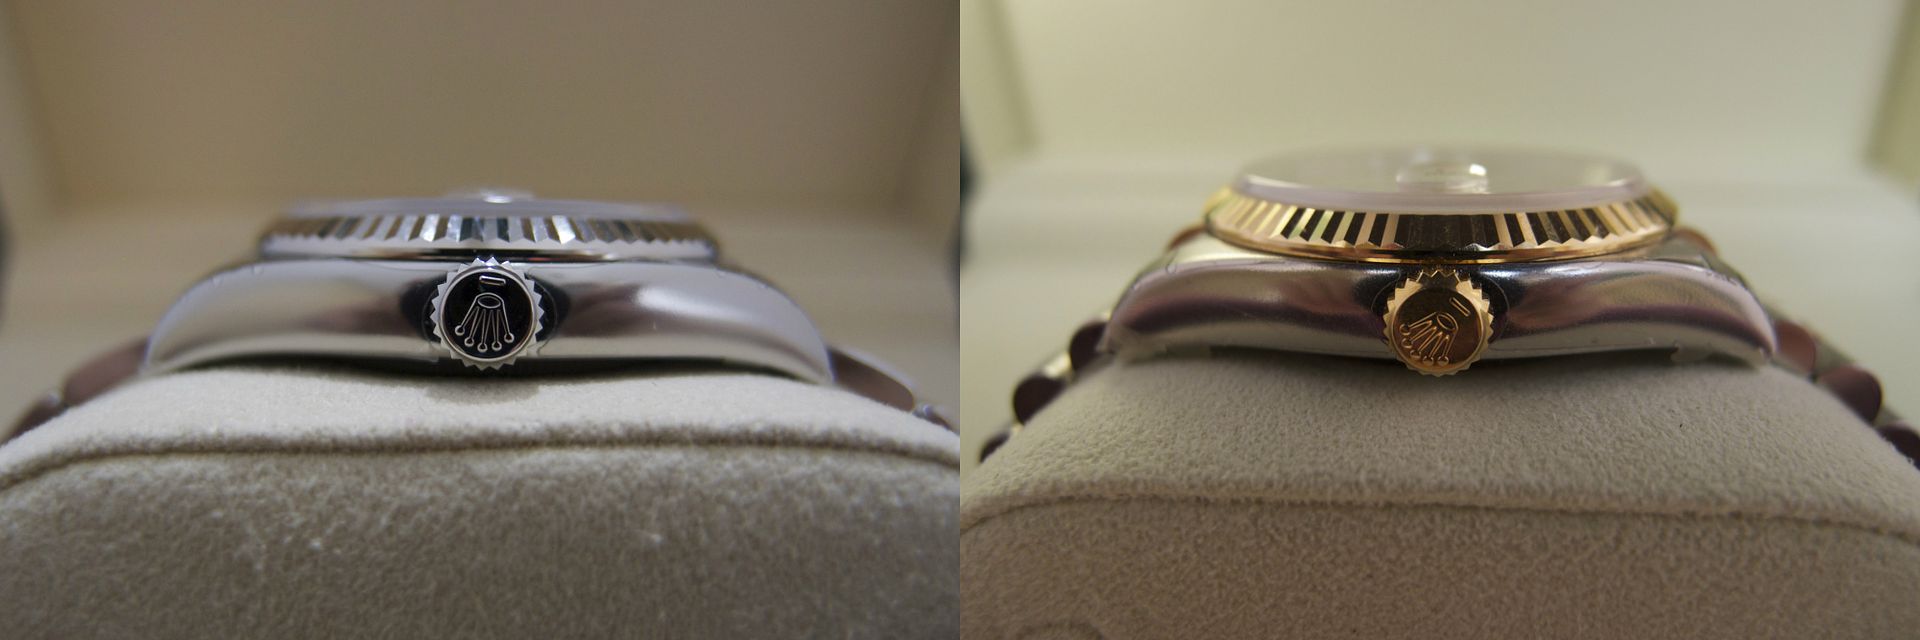  same crown design on Rolex 116234 and 116233 Datejust models